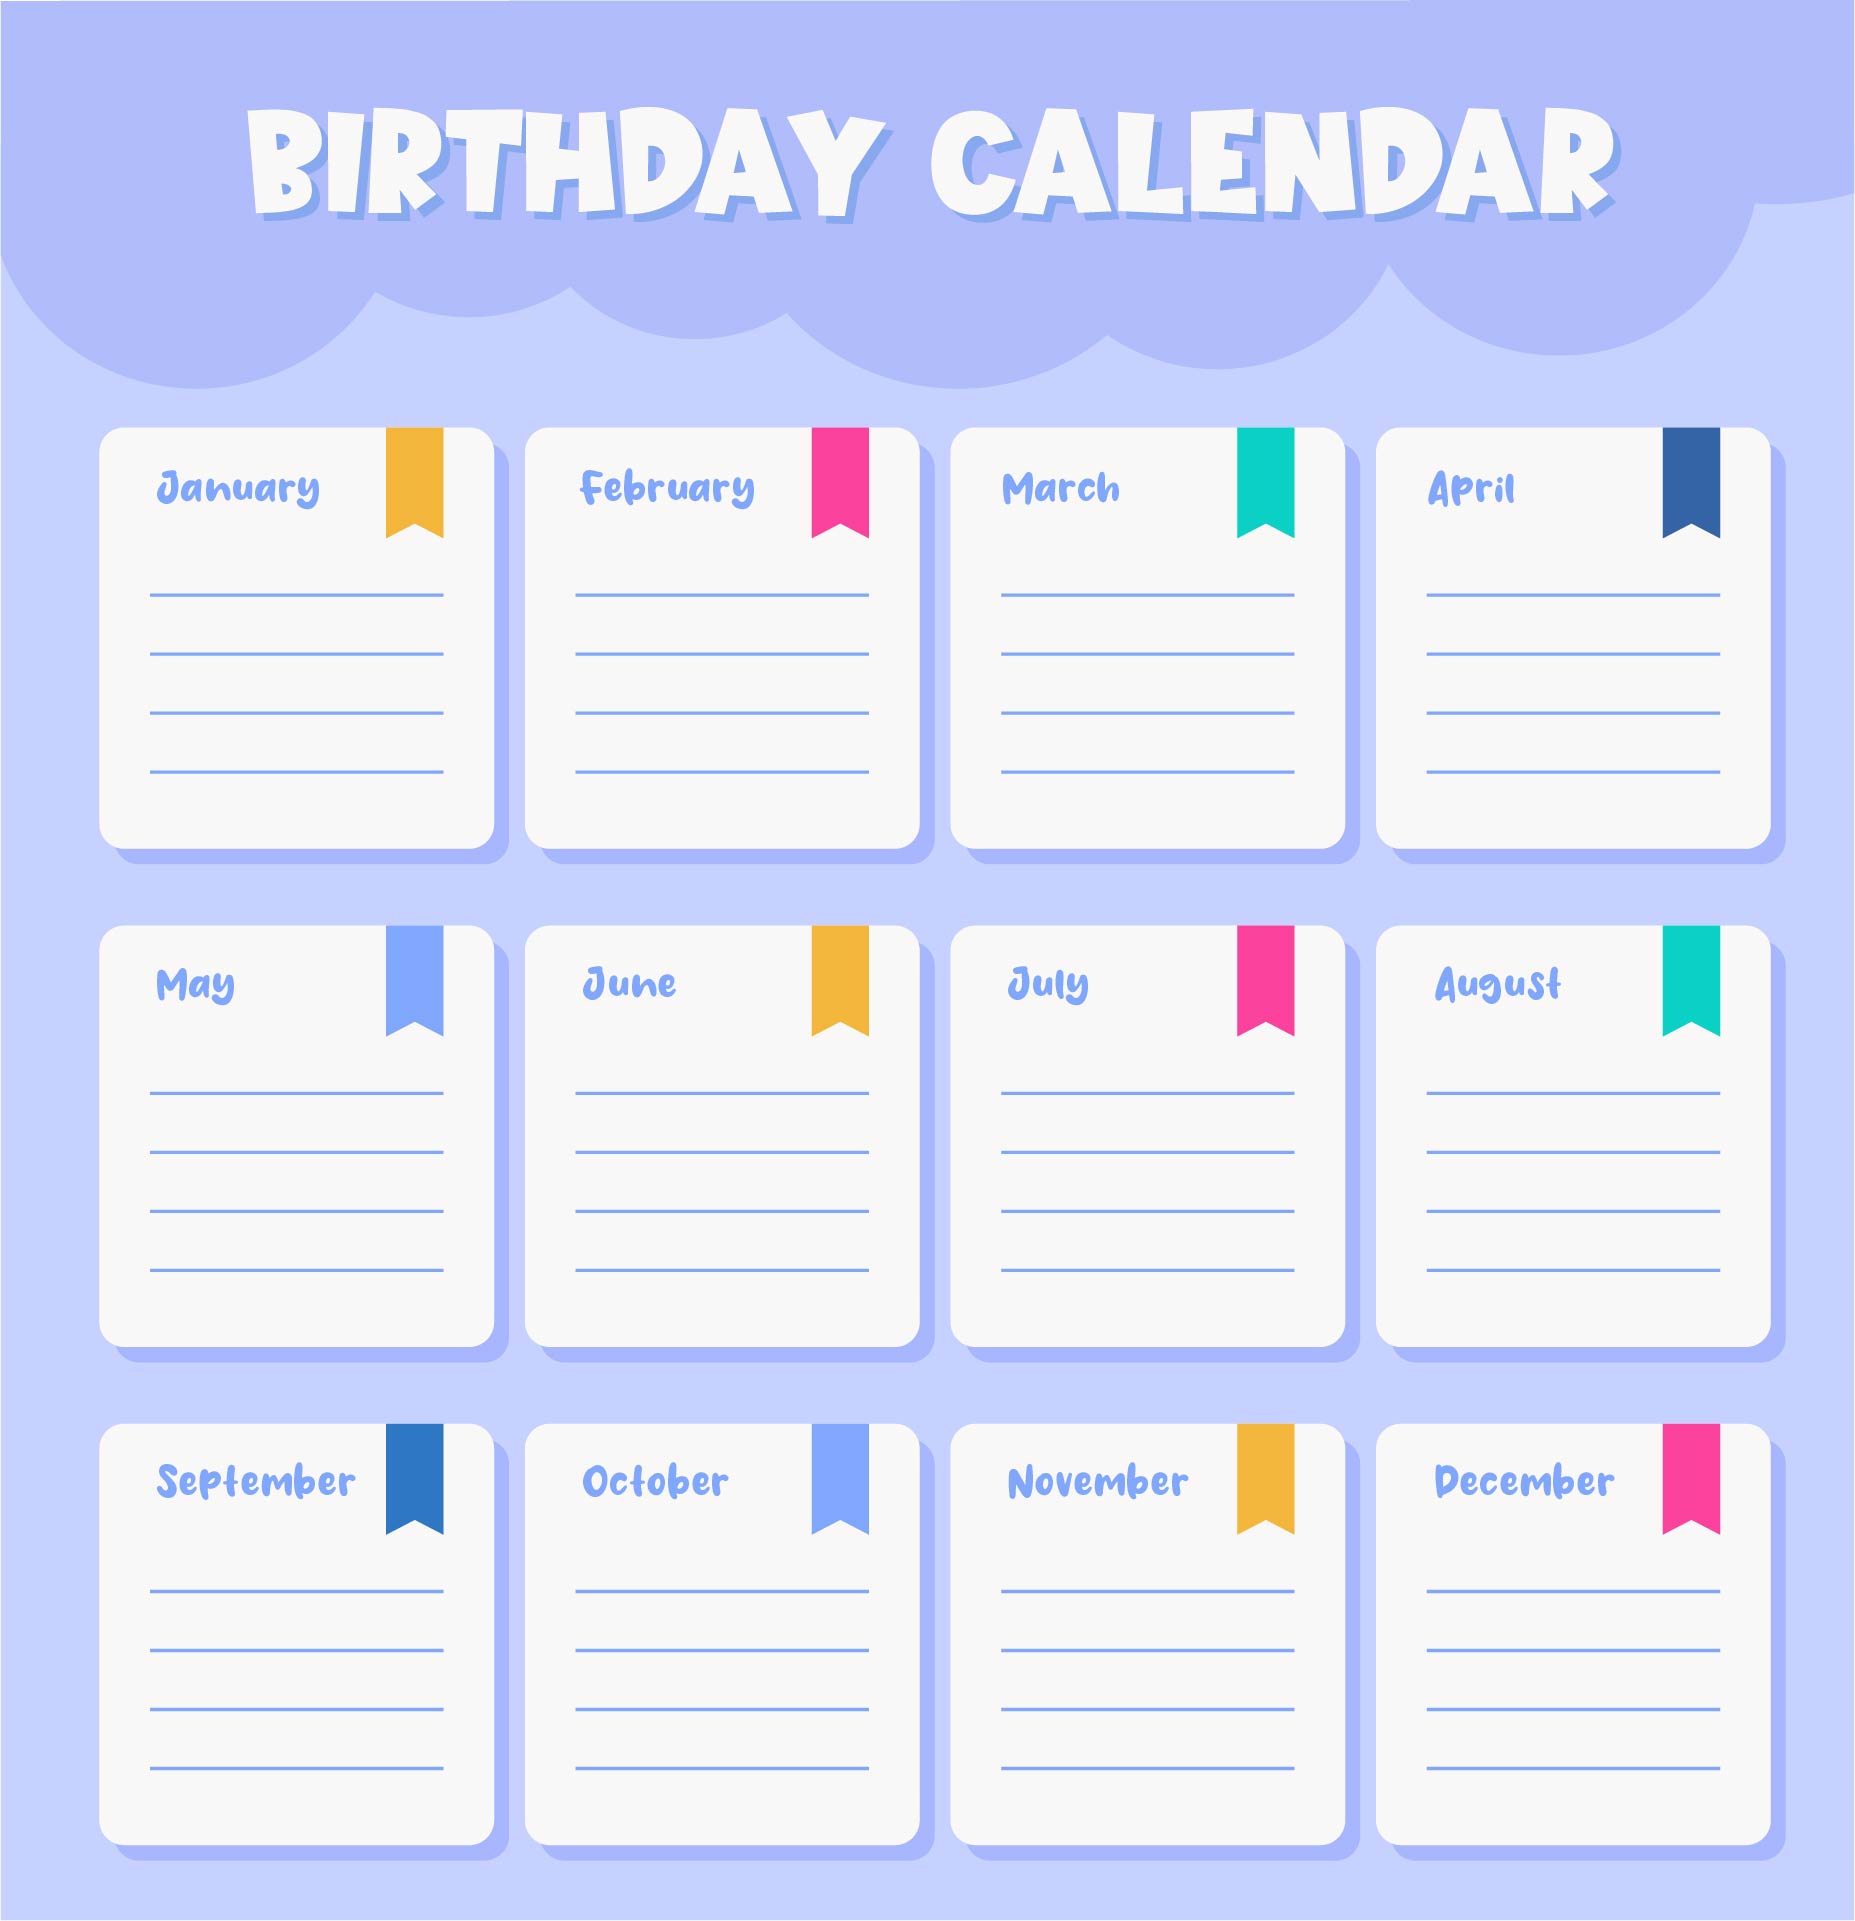 10 Best Family Birthday Calendar Free Printable PDF For Free At Printablee